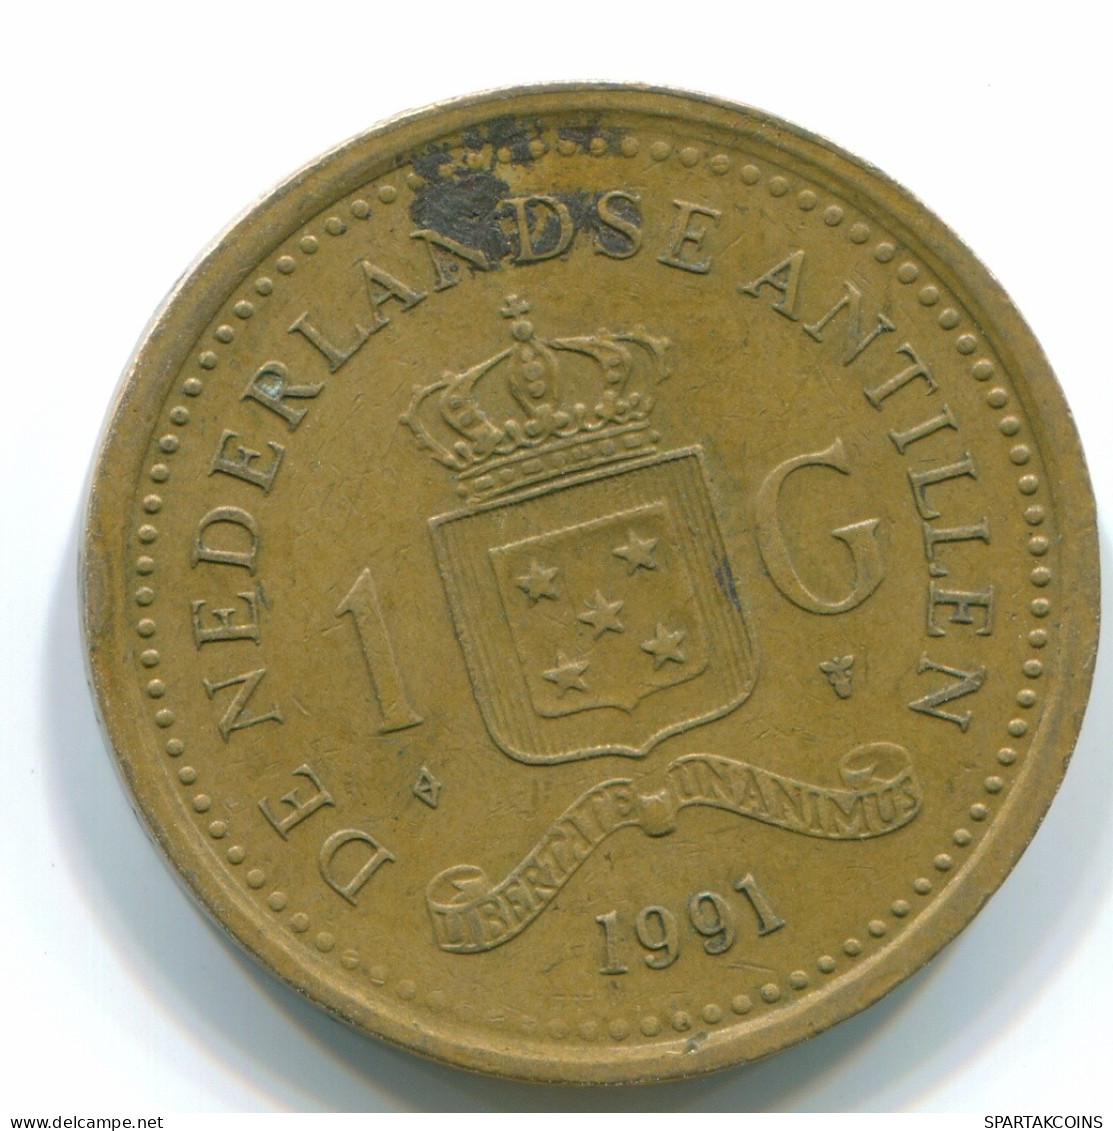 1 GULDEN 1991 NETHERLANDS ANTILLES Aureate Steel Colonial Coin #S12138.U.A - Antilles Néerlandaises